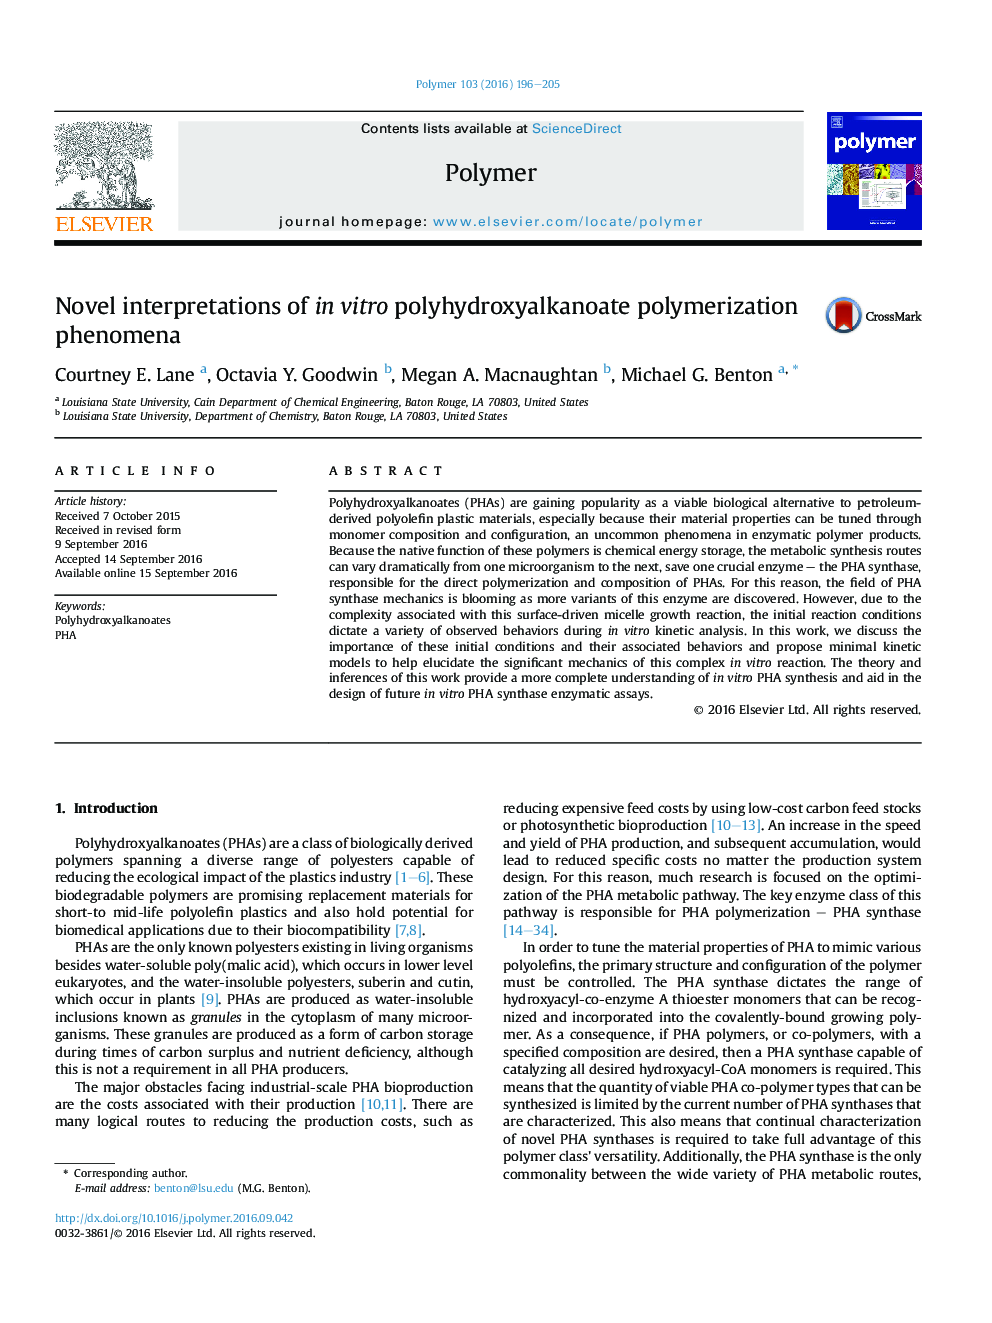 Novel interpretations of inÂ vitro polyhydroxyalkanoate polymerization phenomena